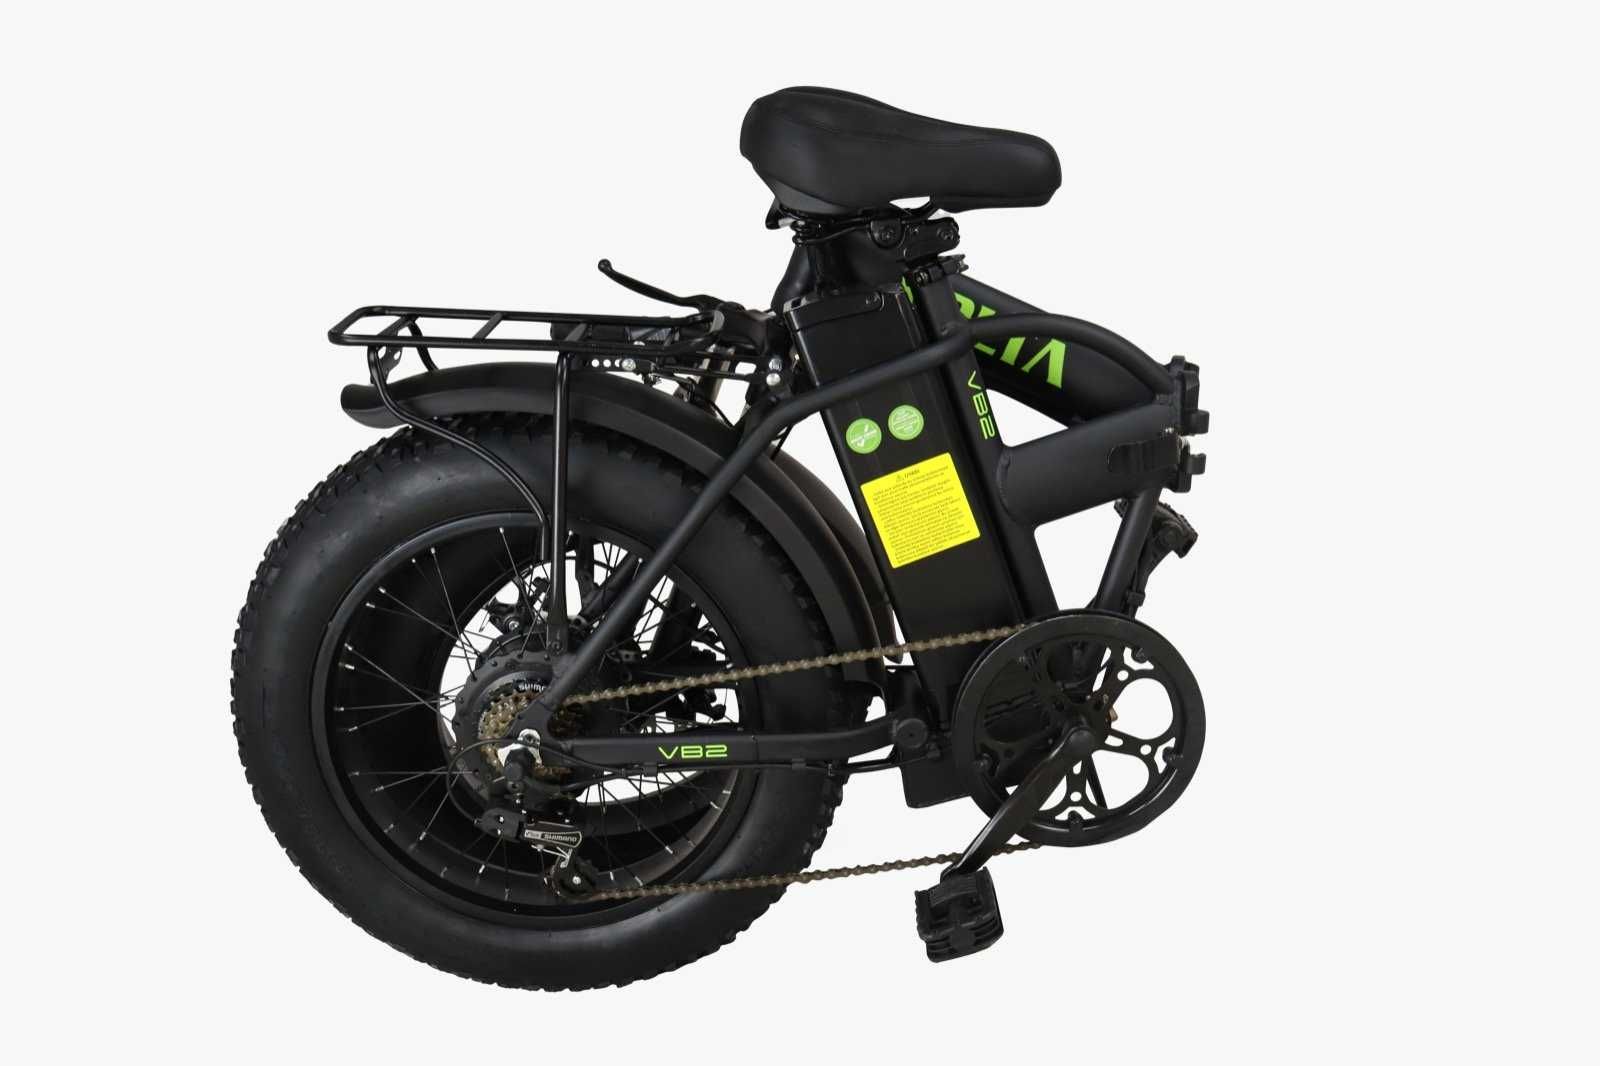 Електрическо колело Volta VB2 с Shimano скорости 6 степени